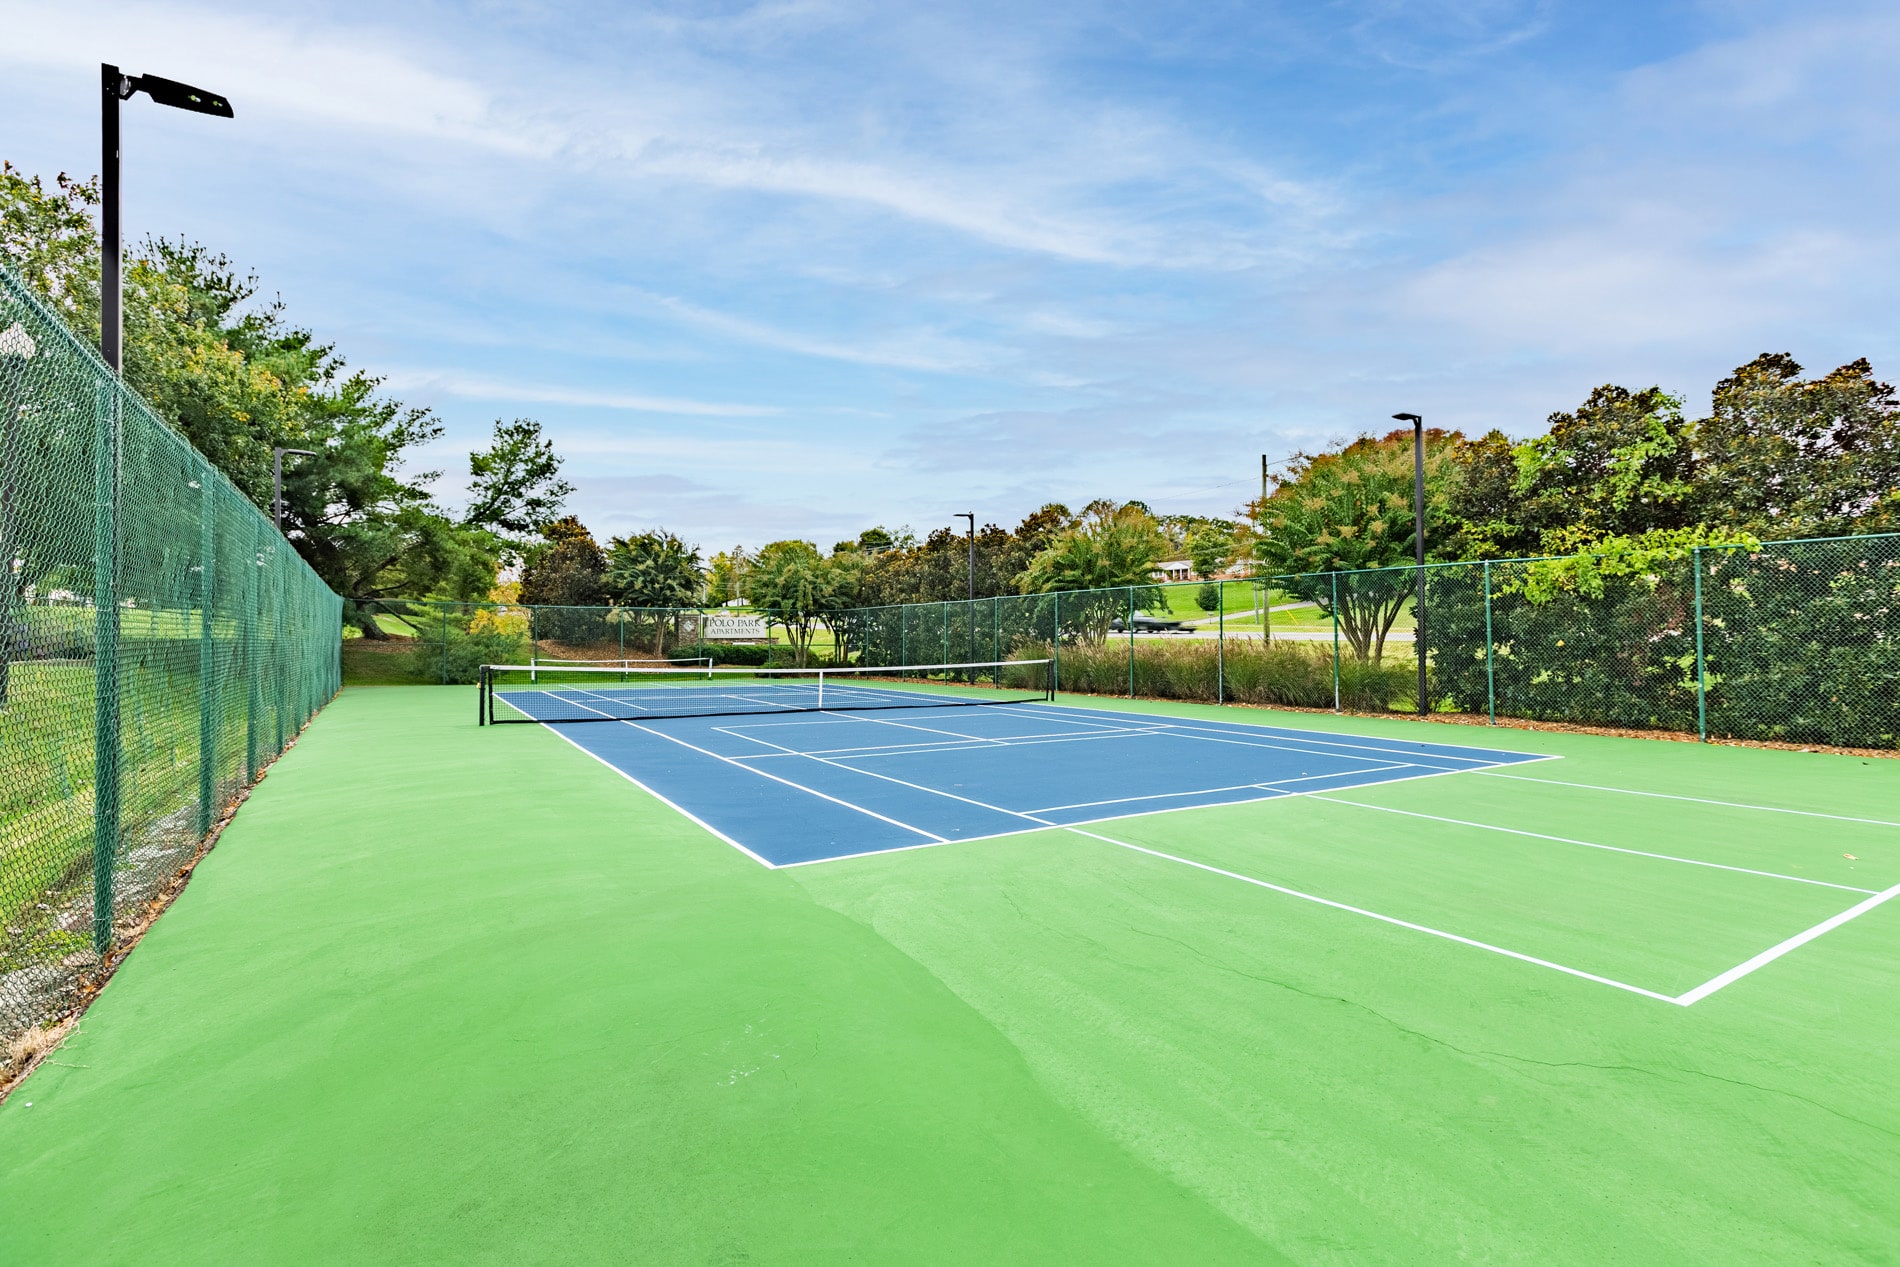 Polo Park tennis court